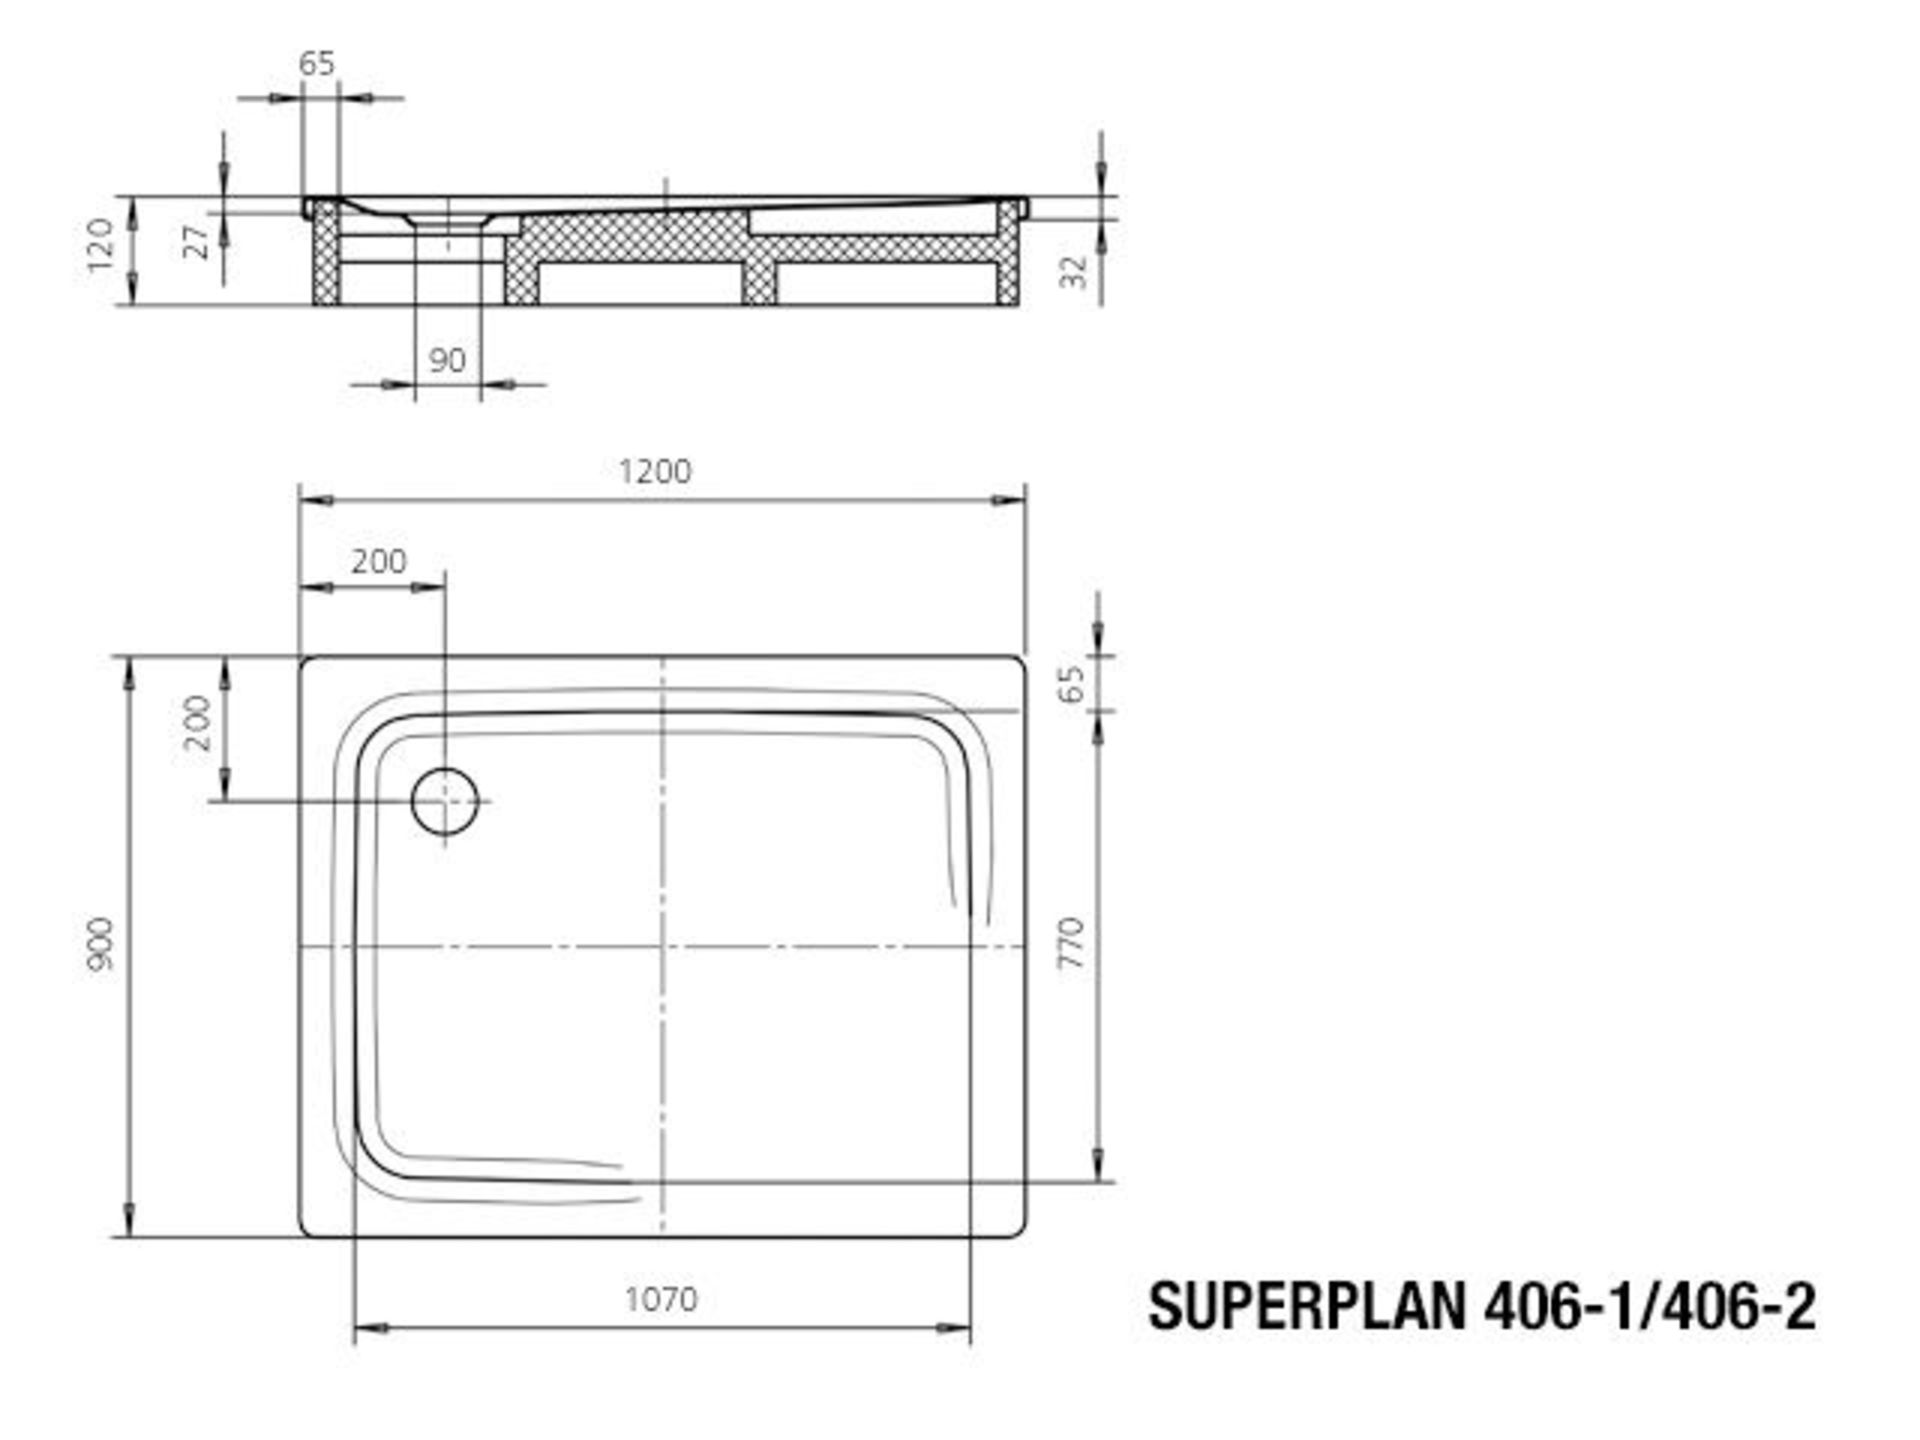 Kaldewei ST SUPERPLAN shower tray, 900x1200x25, anti-slip, alpine white, easy-clean finish. RRP £390 - Image 2 of 3